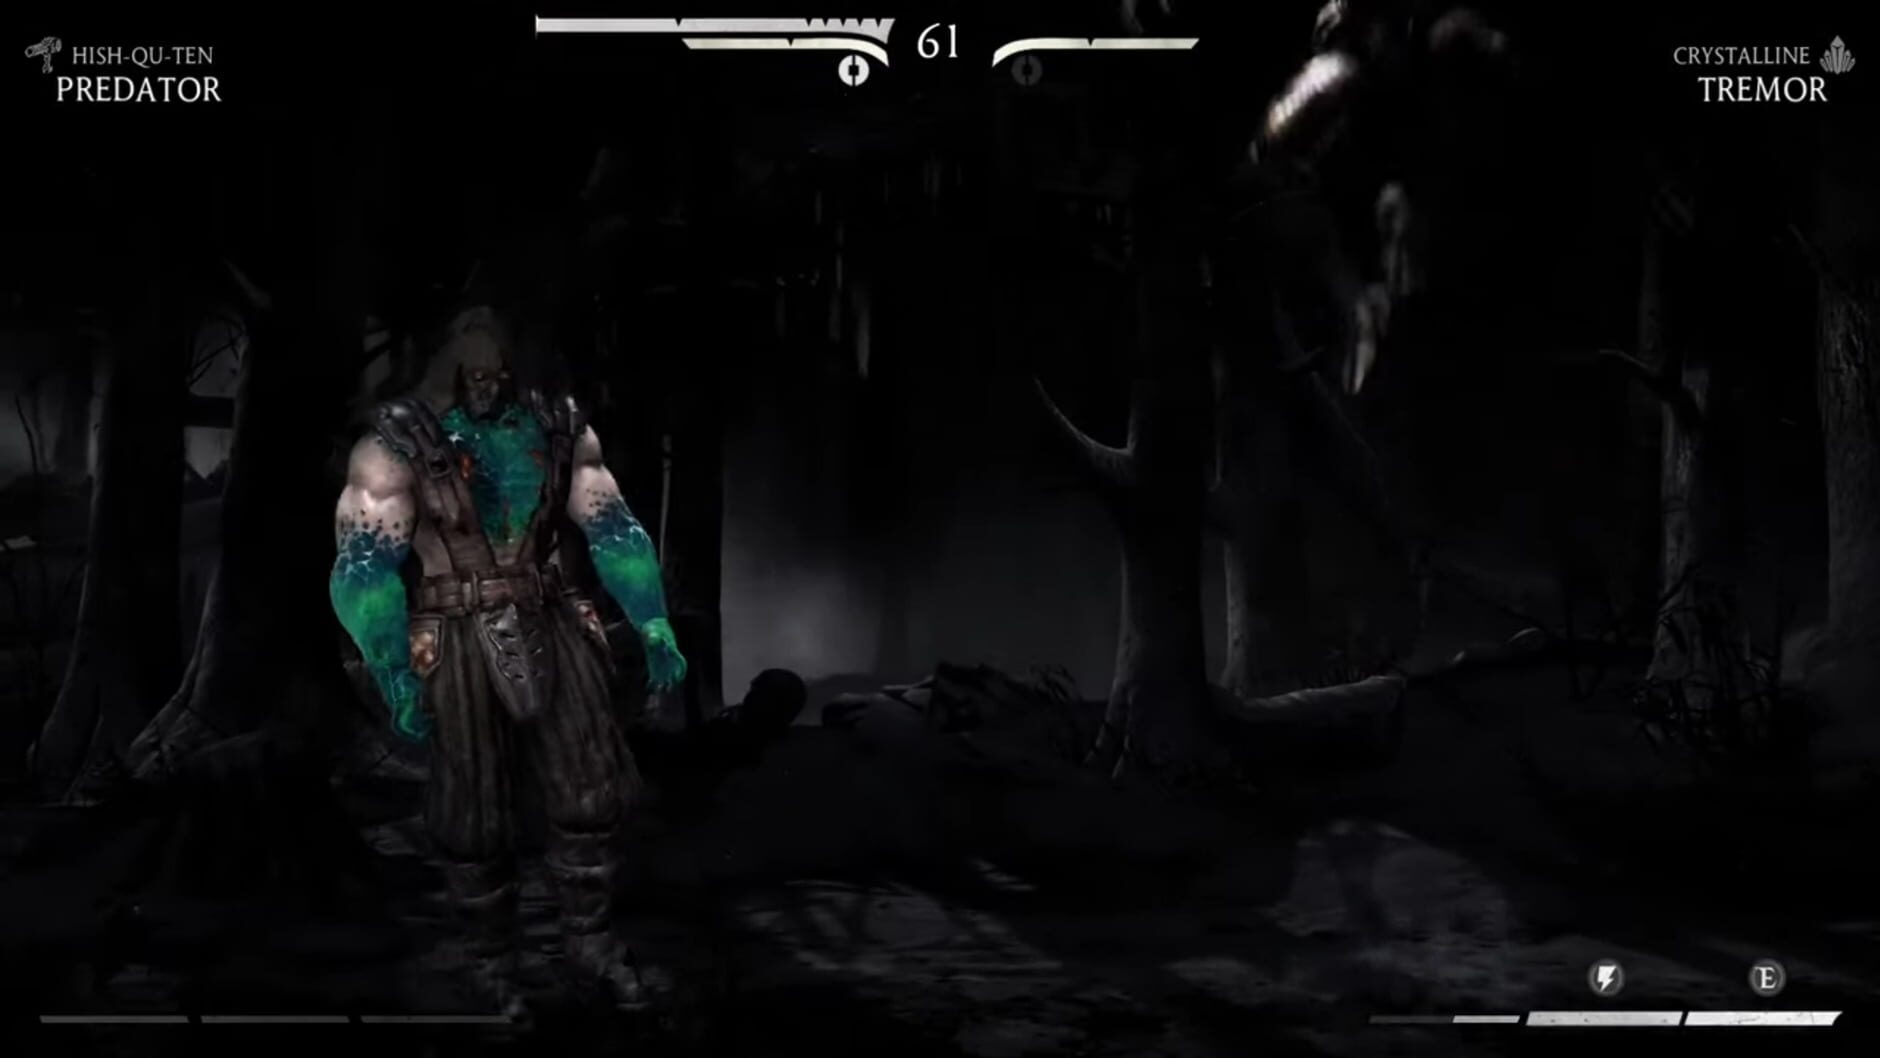 Screenshot for Mortal Kombat X: Tremor